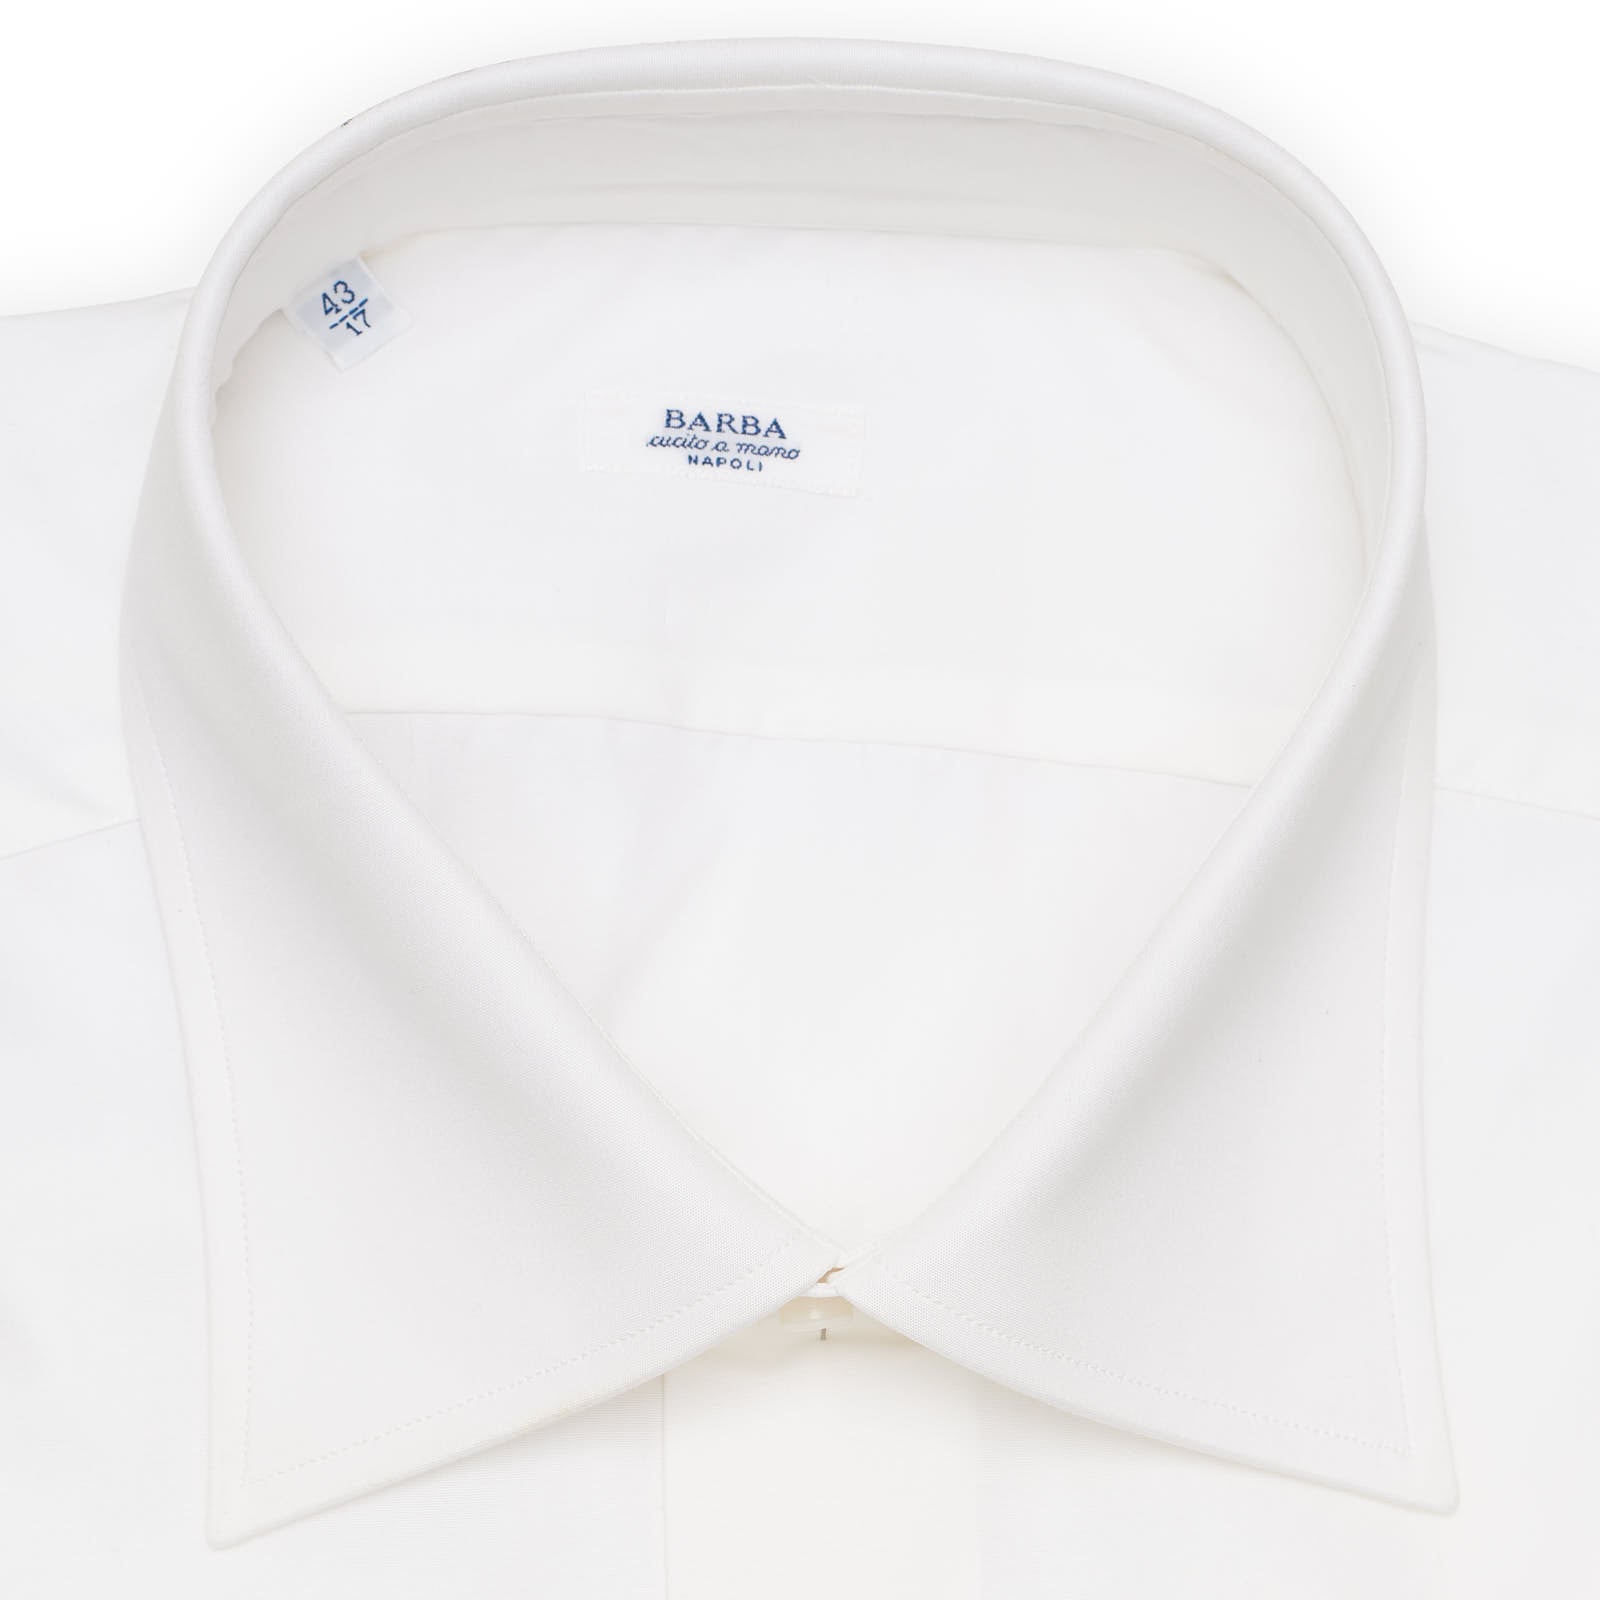 BARBA Napoli Handmade White Cotton French Cuff Dress Shirt EU 43 NEW US 17